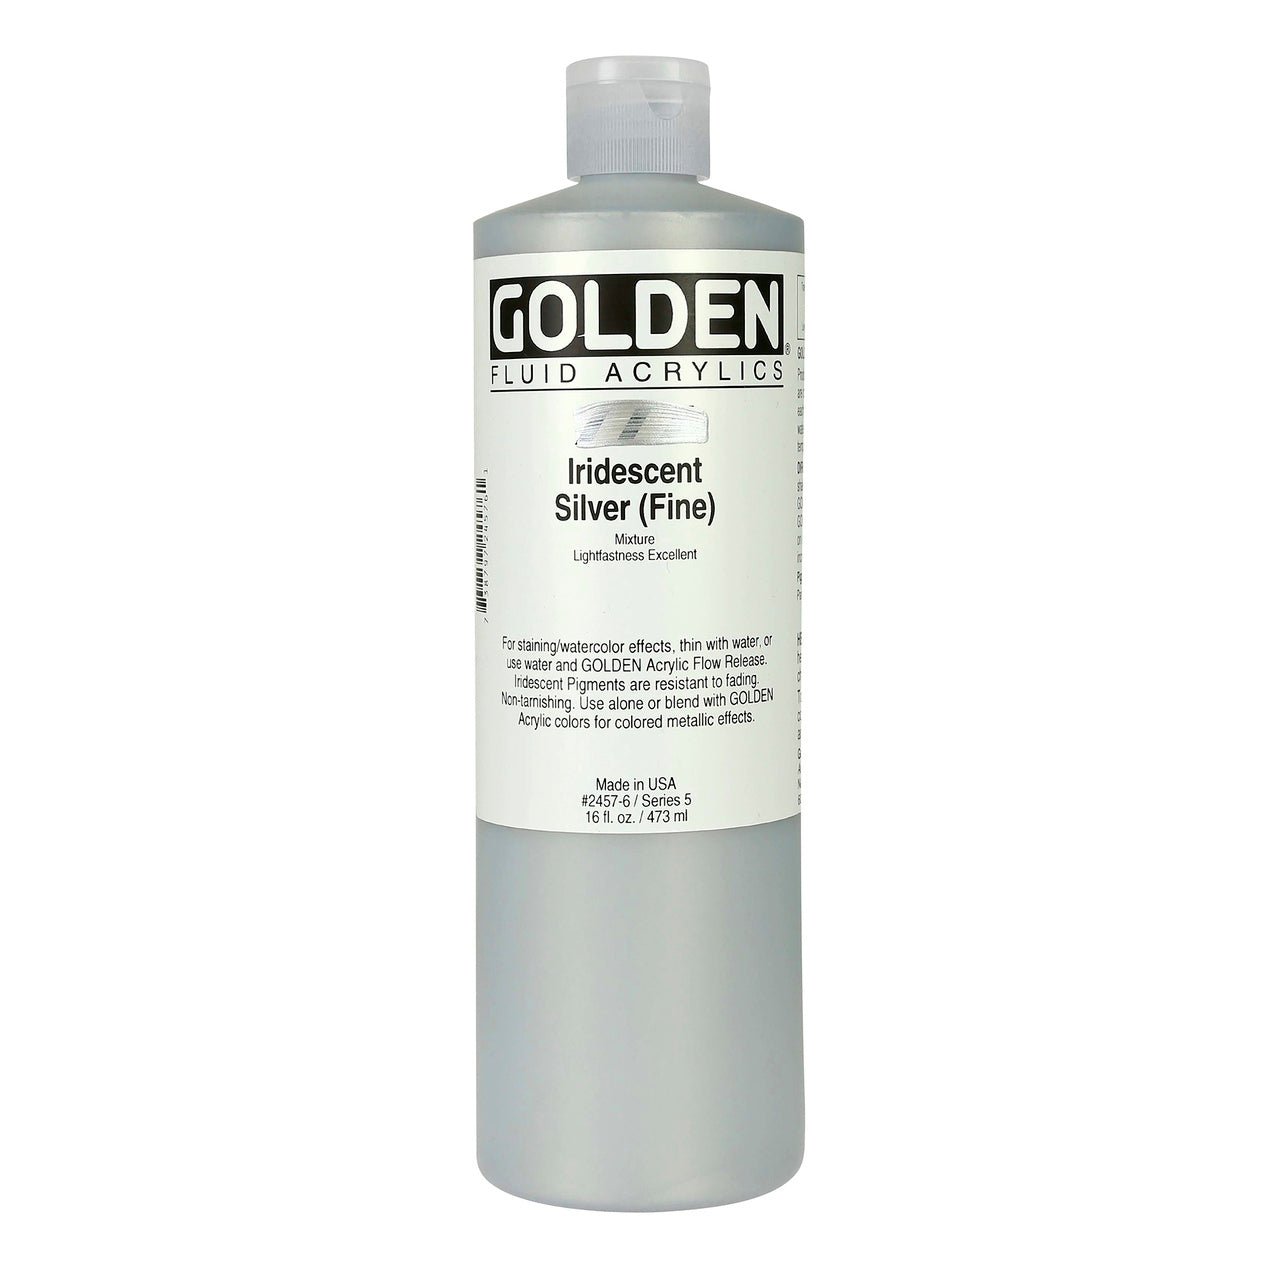 Golden Fluid Acrylic Iridescent Silver (fine) 16 oz - merriartist.com